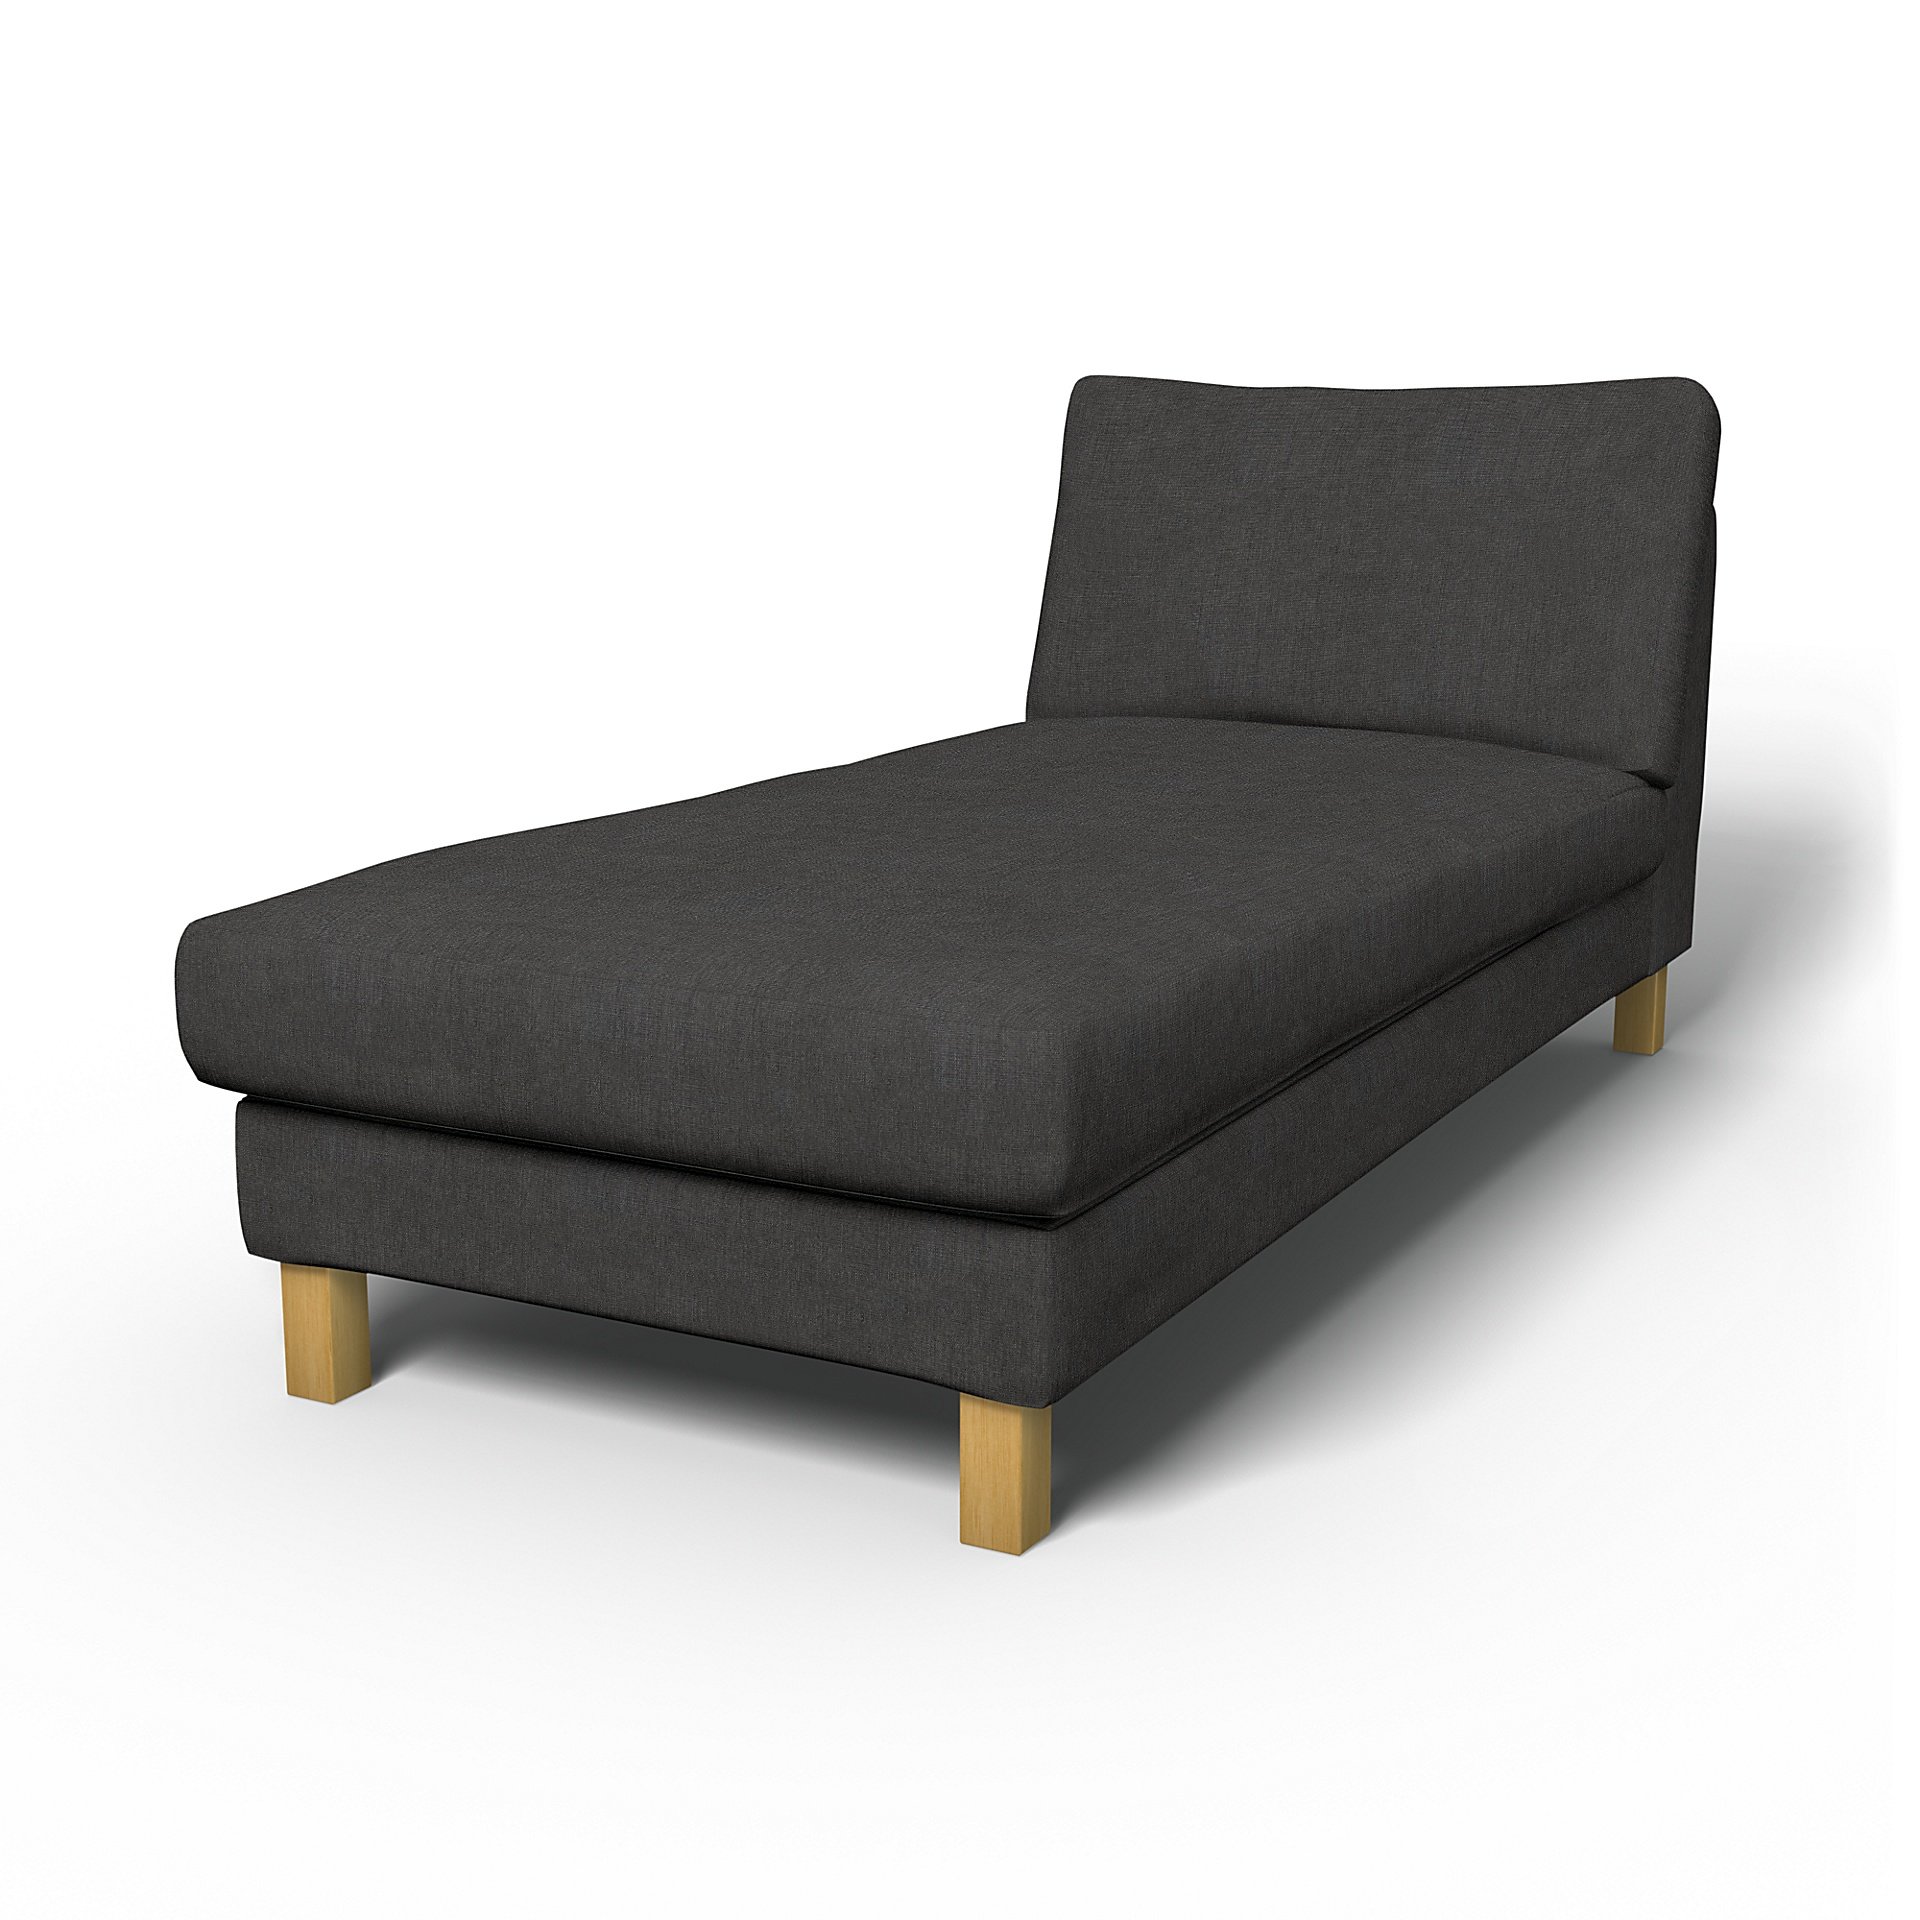 IKEA - Karlstad Stand Alone Chaise Longue Cover, Espresso, Linen - Bemz